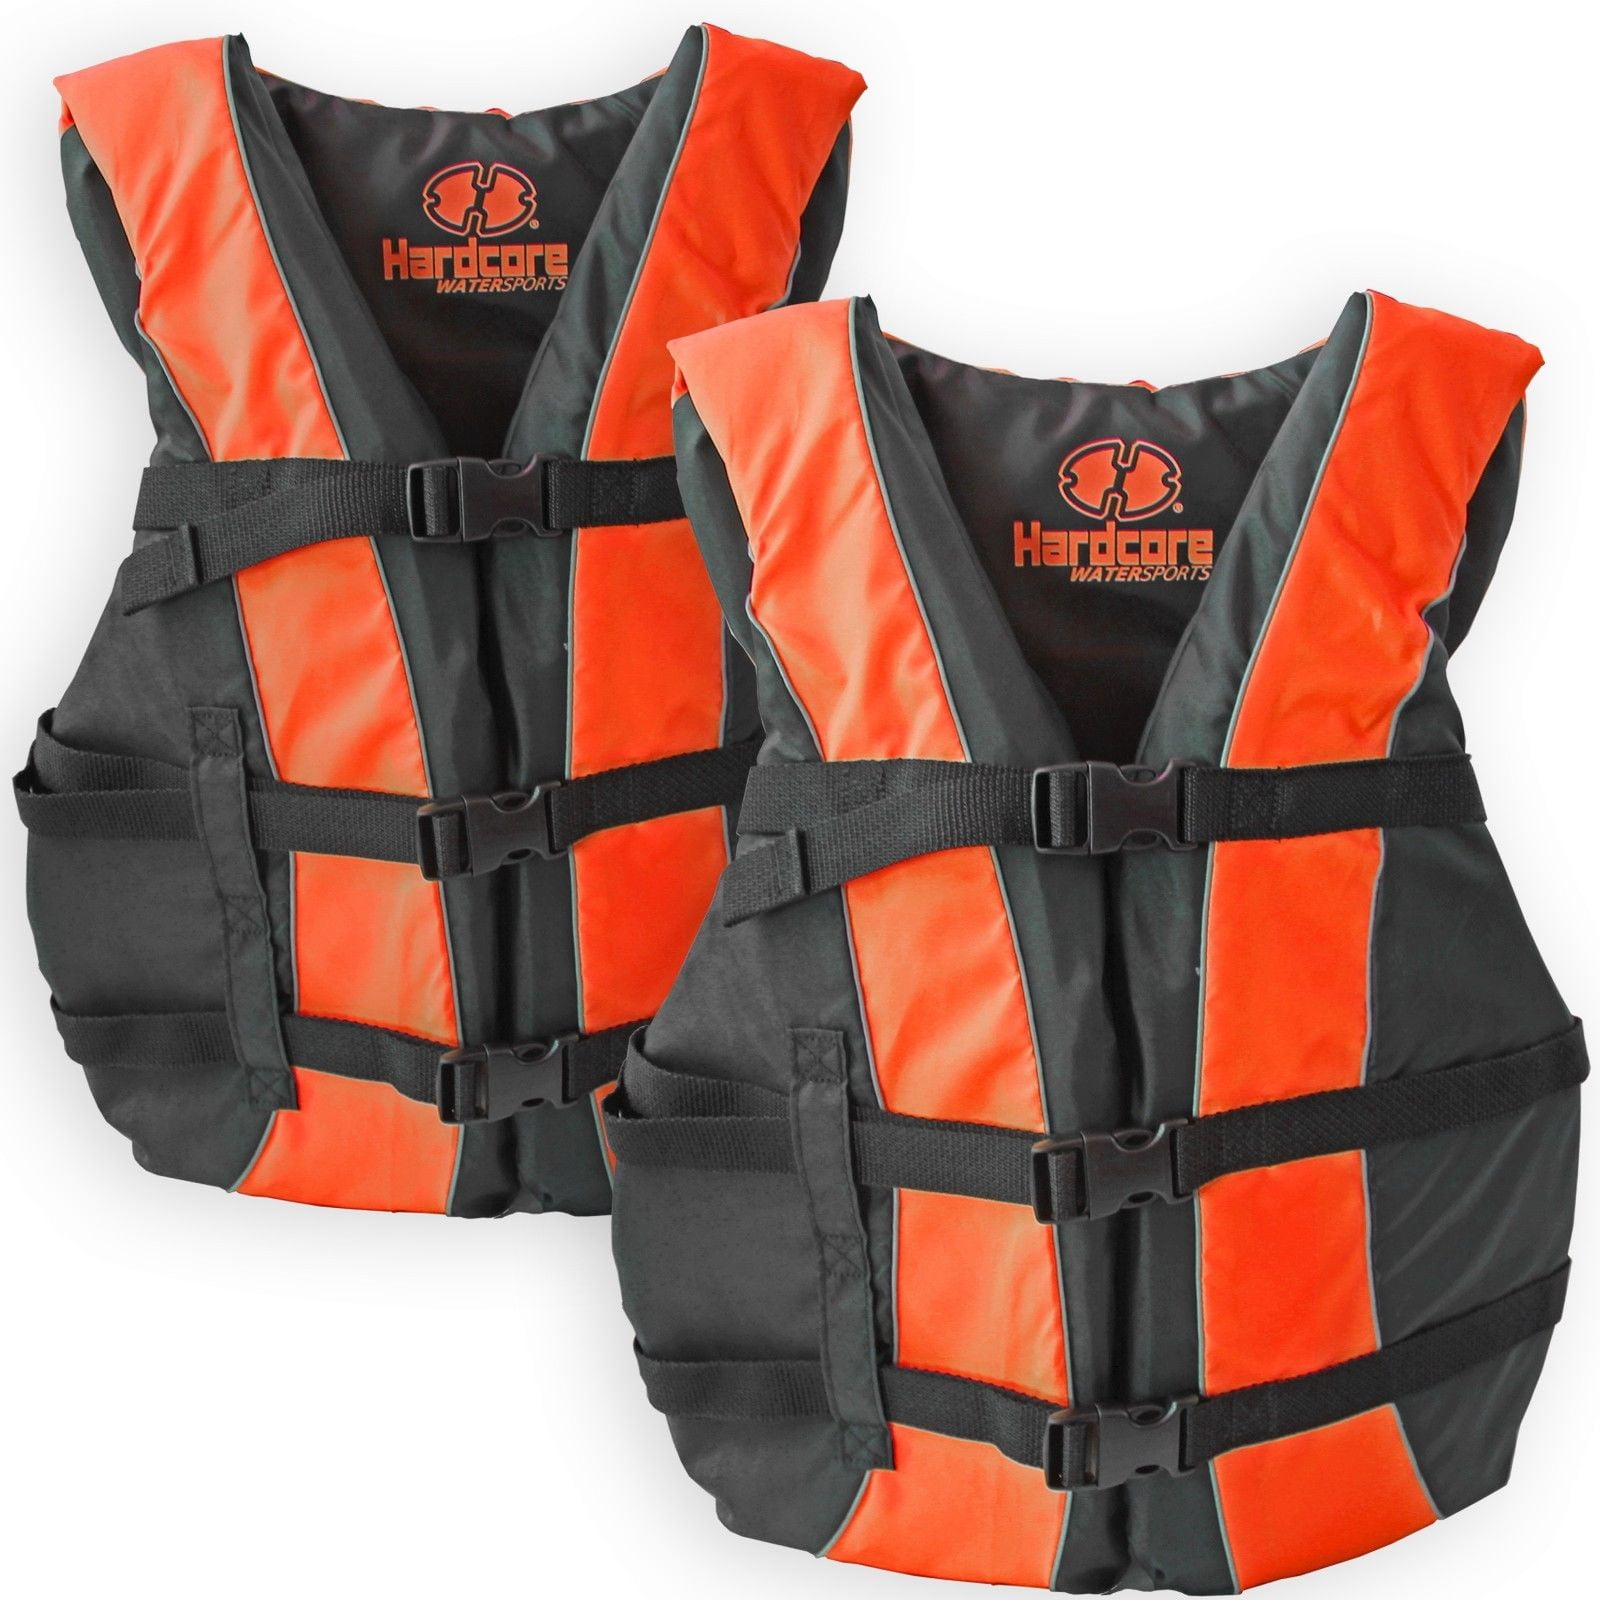 Hardcore Water Sports Hardcore life jacket 2 pack paddle vest for adults;  Coast Guard approved Type III PFD life vest flotation device; Jet ski